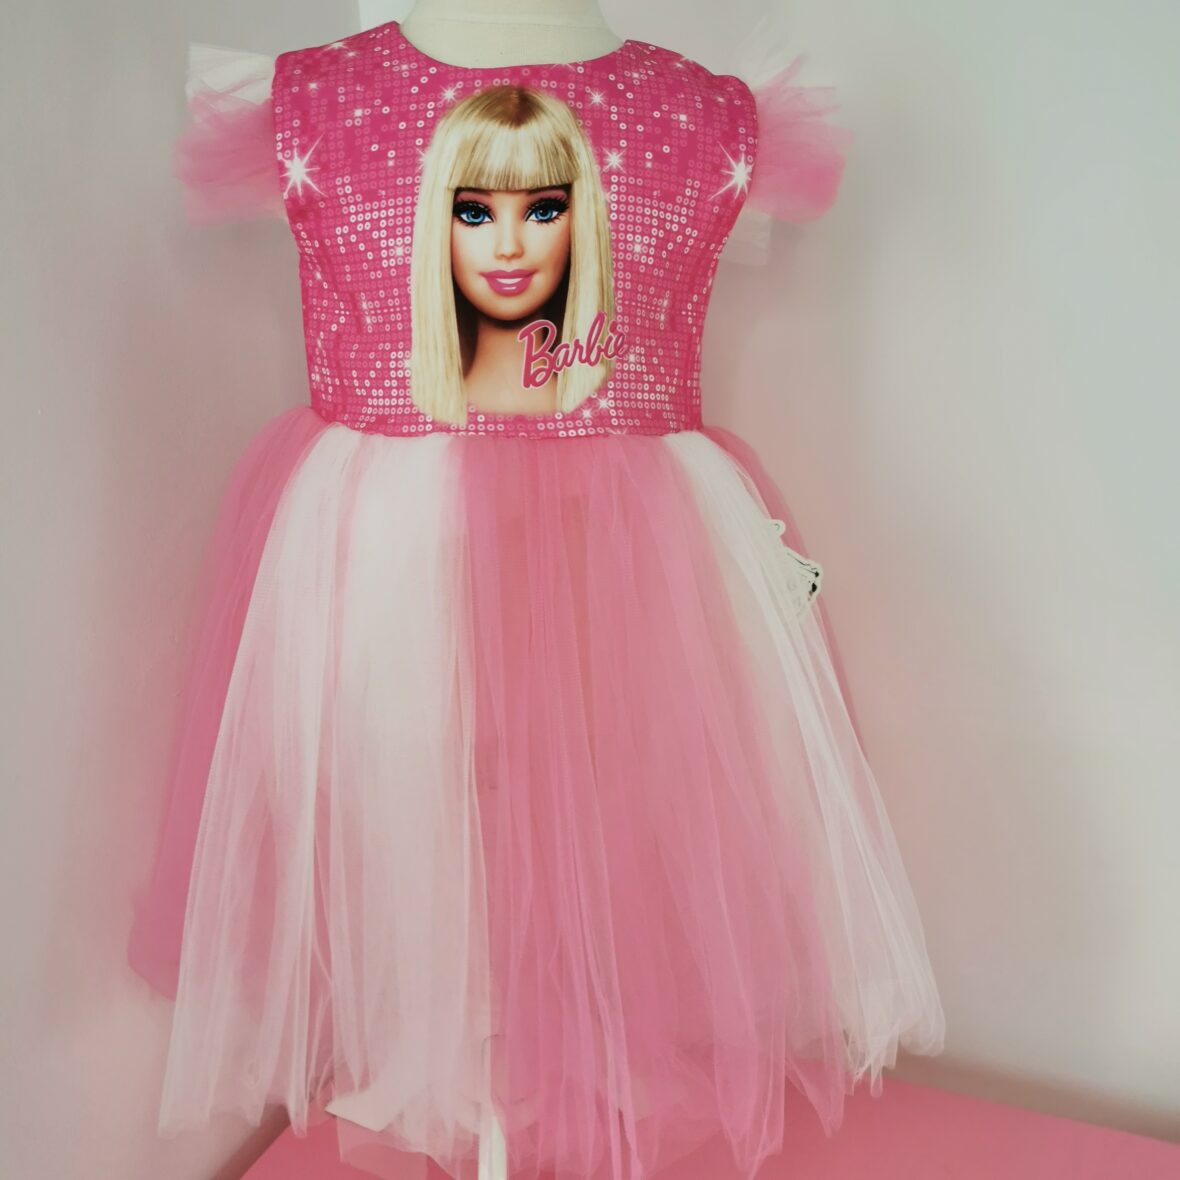 rochita fetita barbie roz